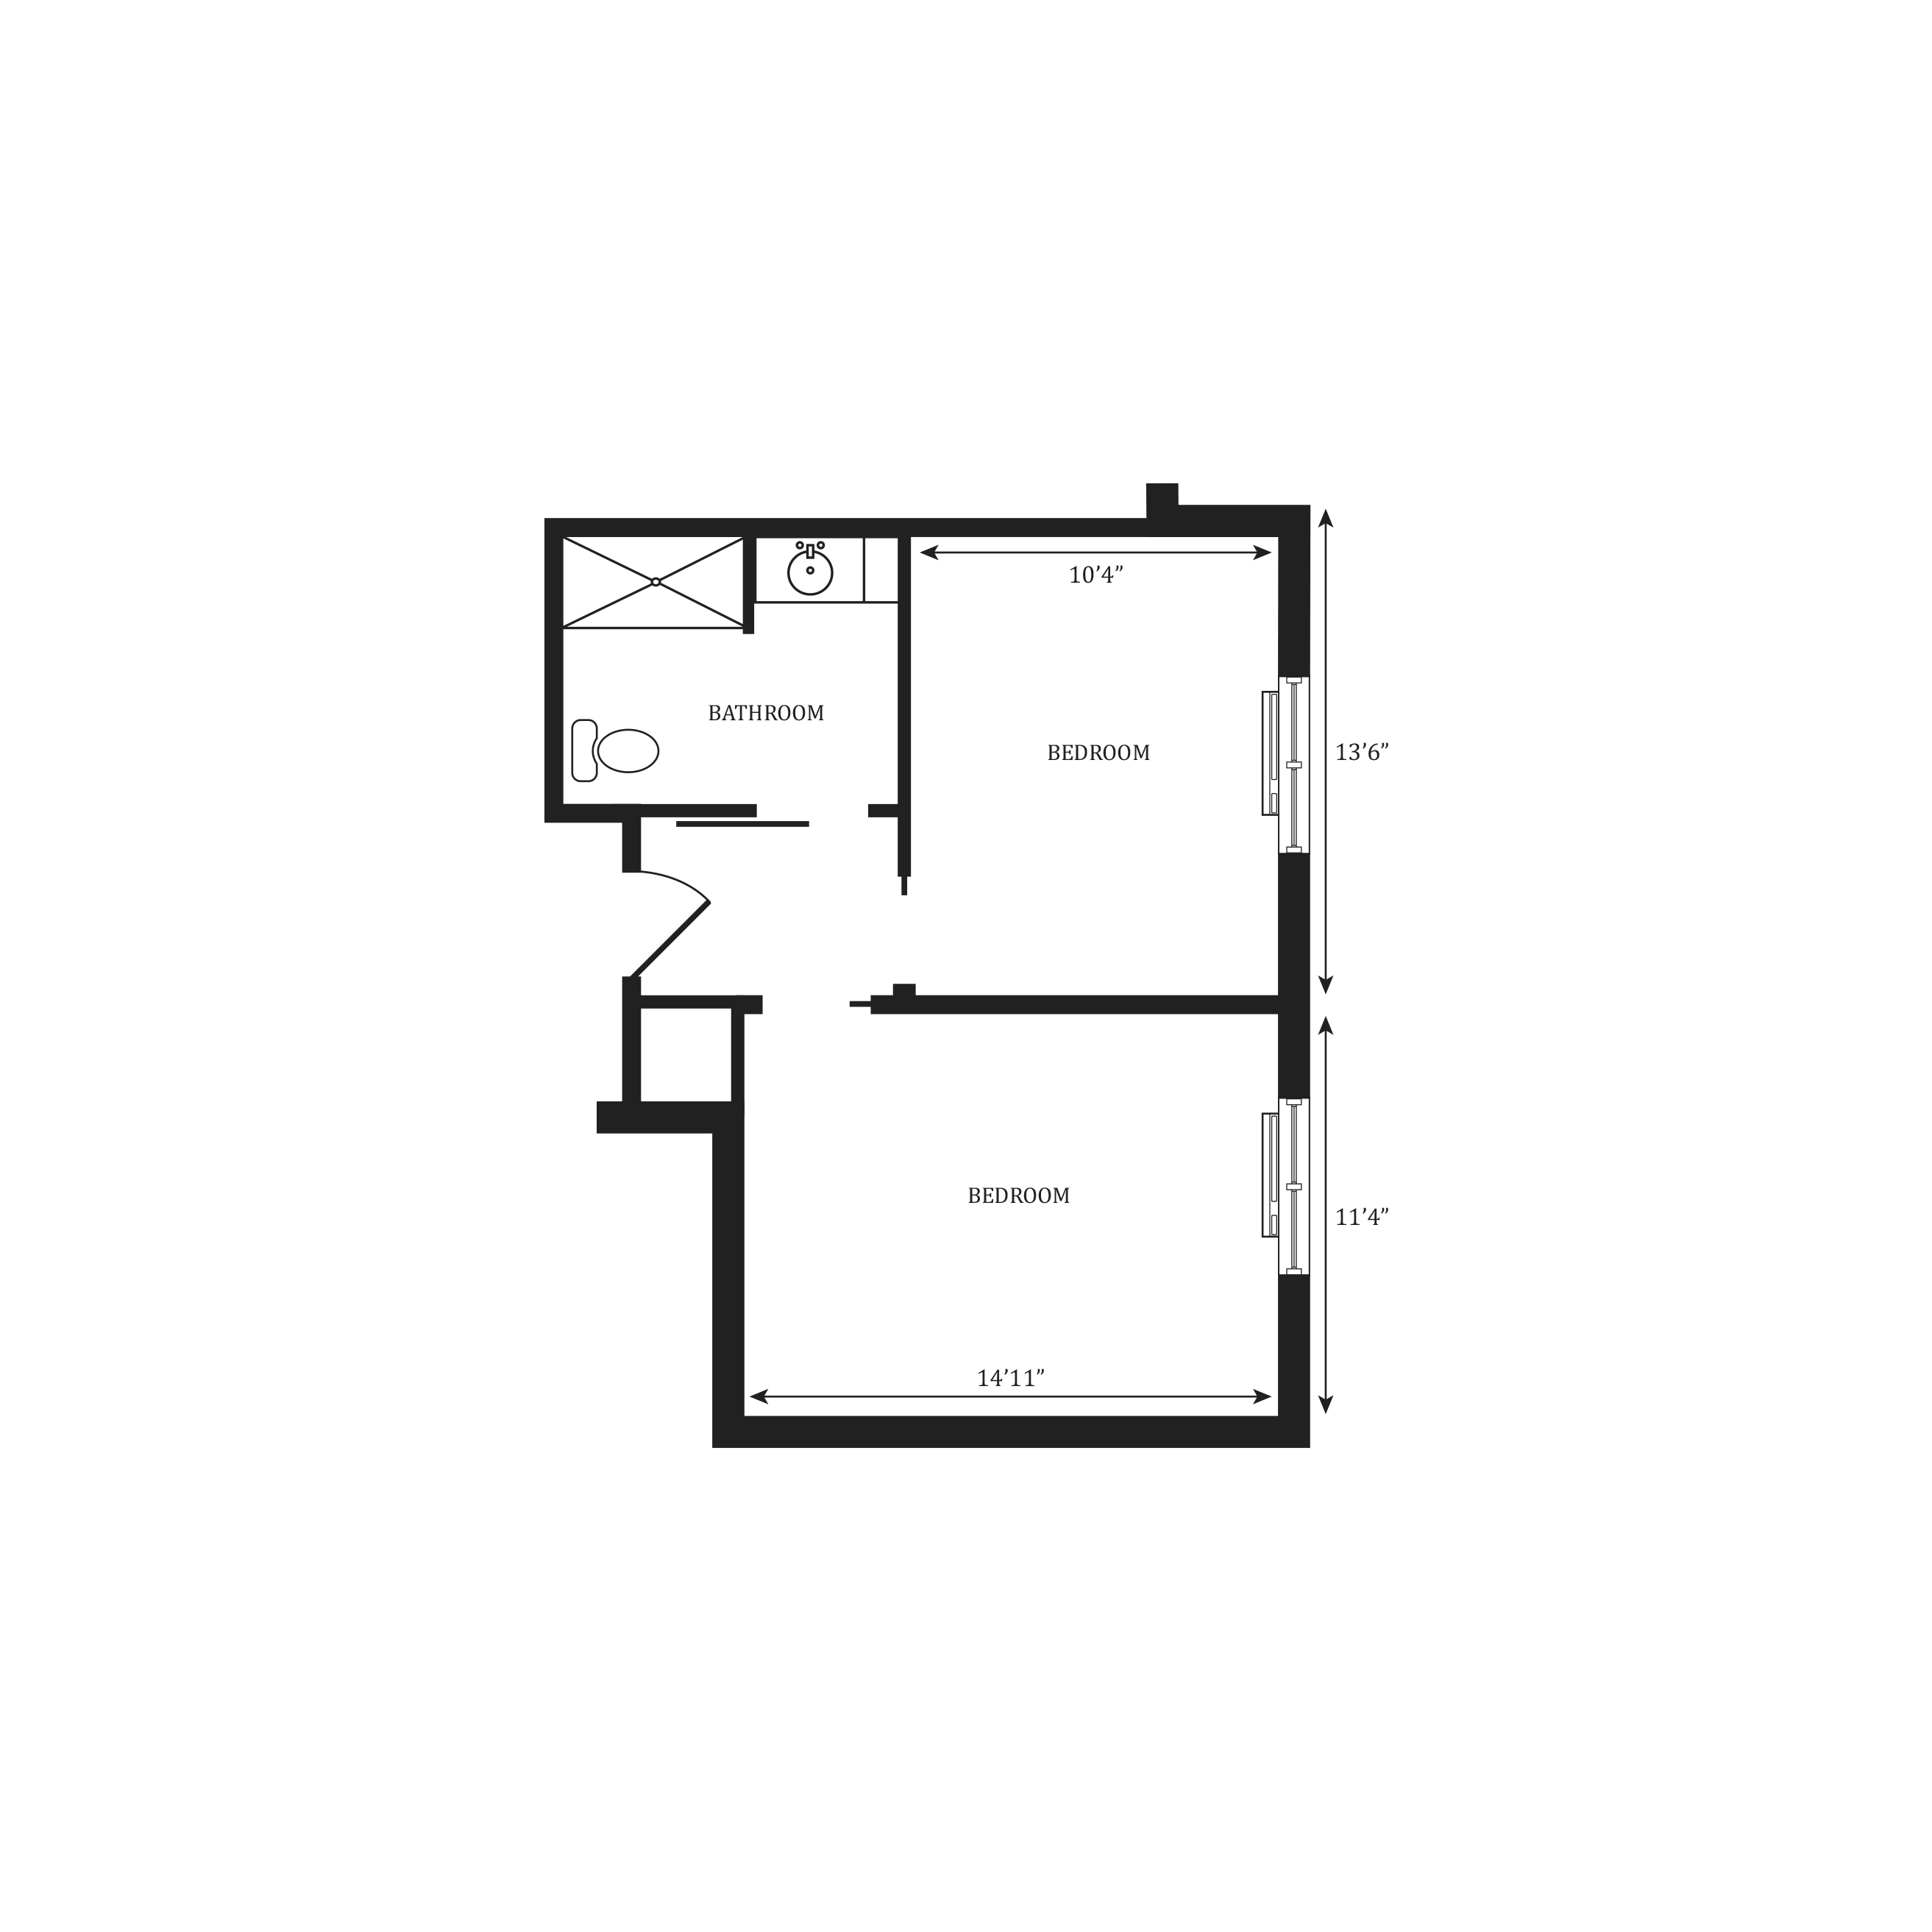 Duesenberg floor plan 